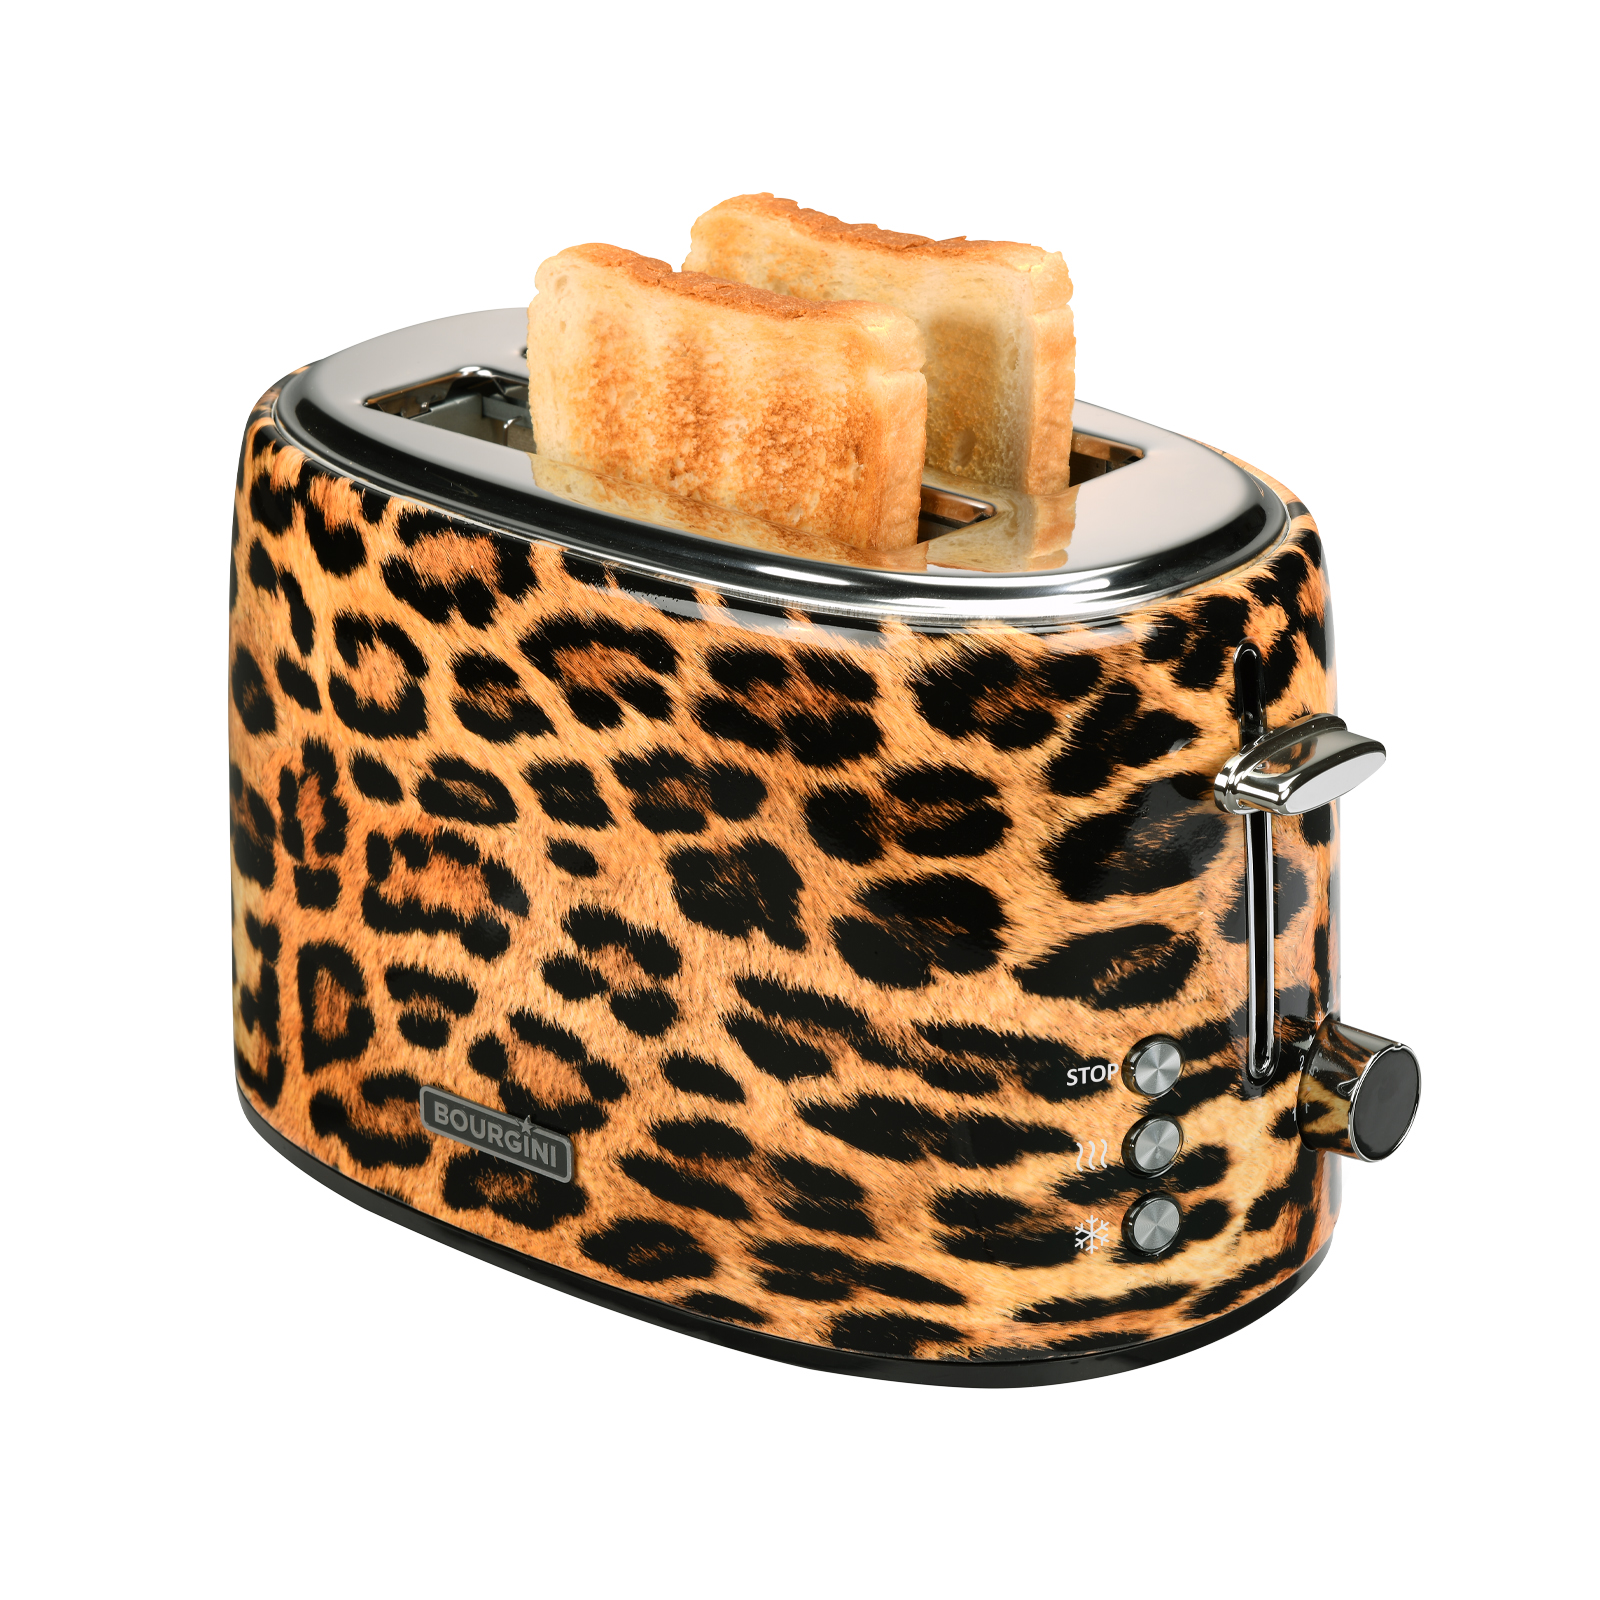 Toaster Schlitze: BOURGINI Mehrfarbig 2) Watt, Panther (1000